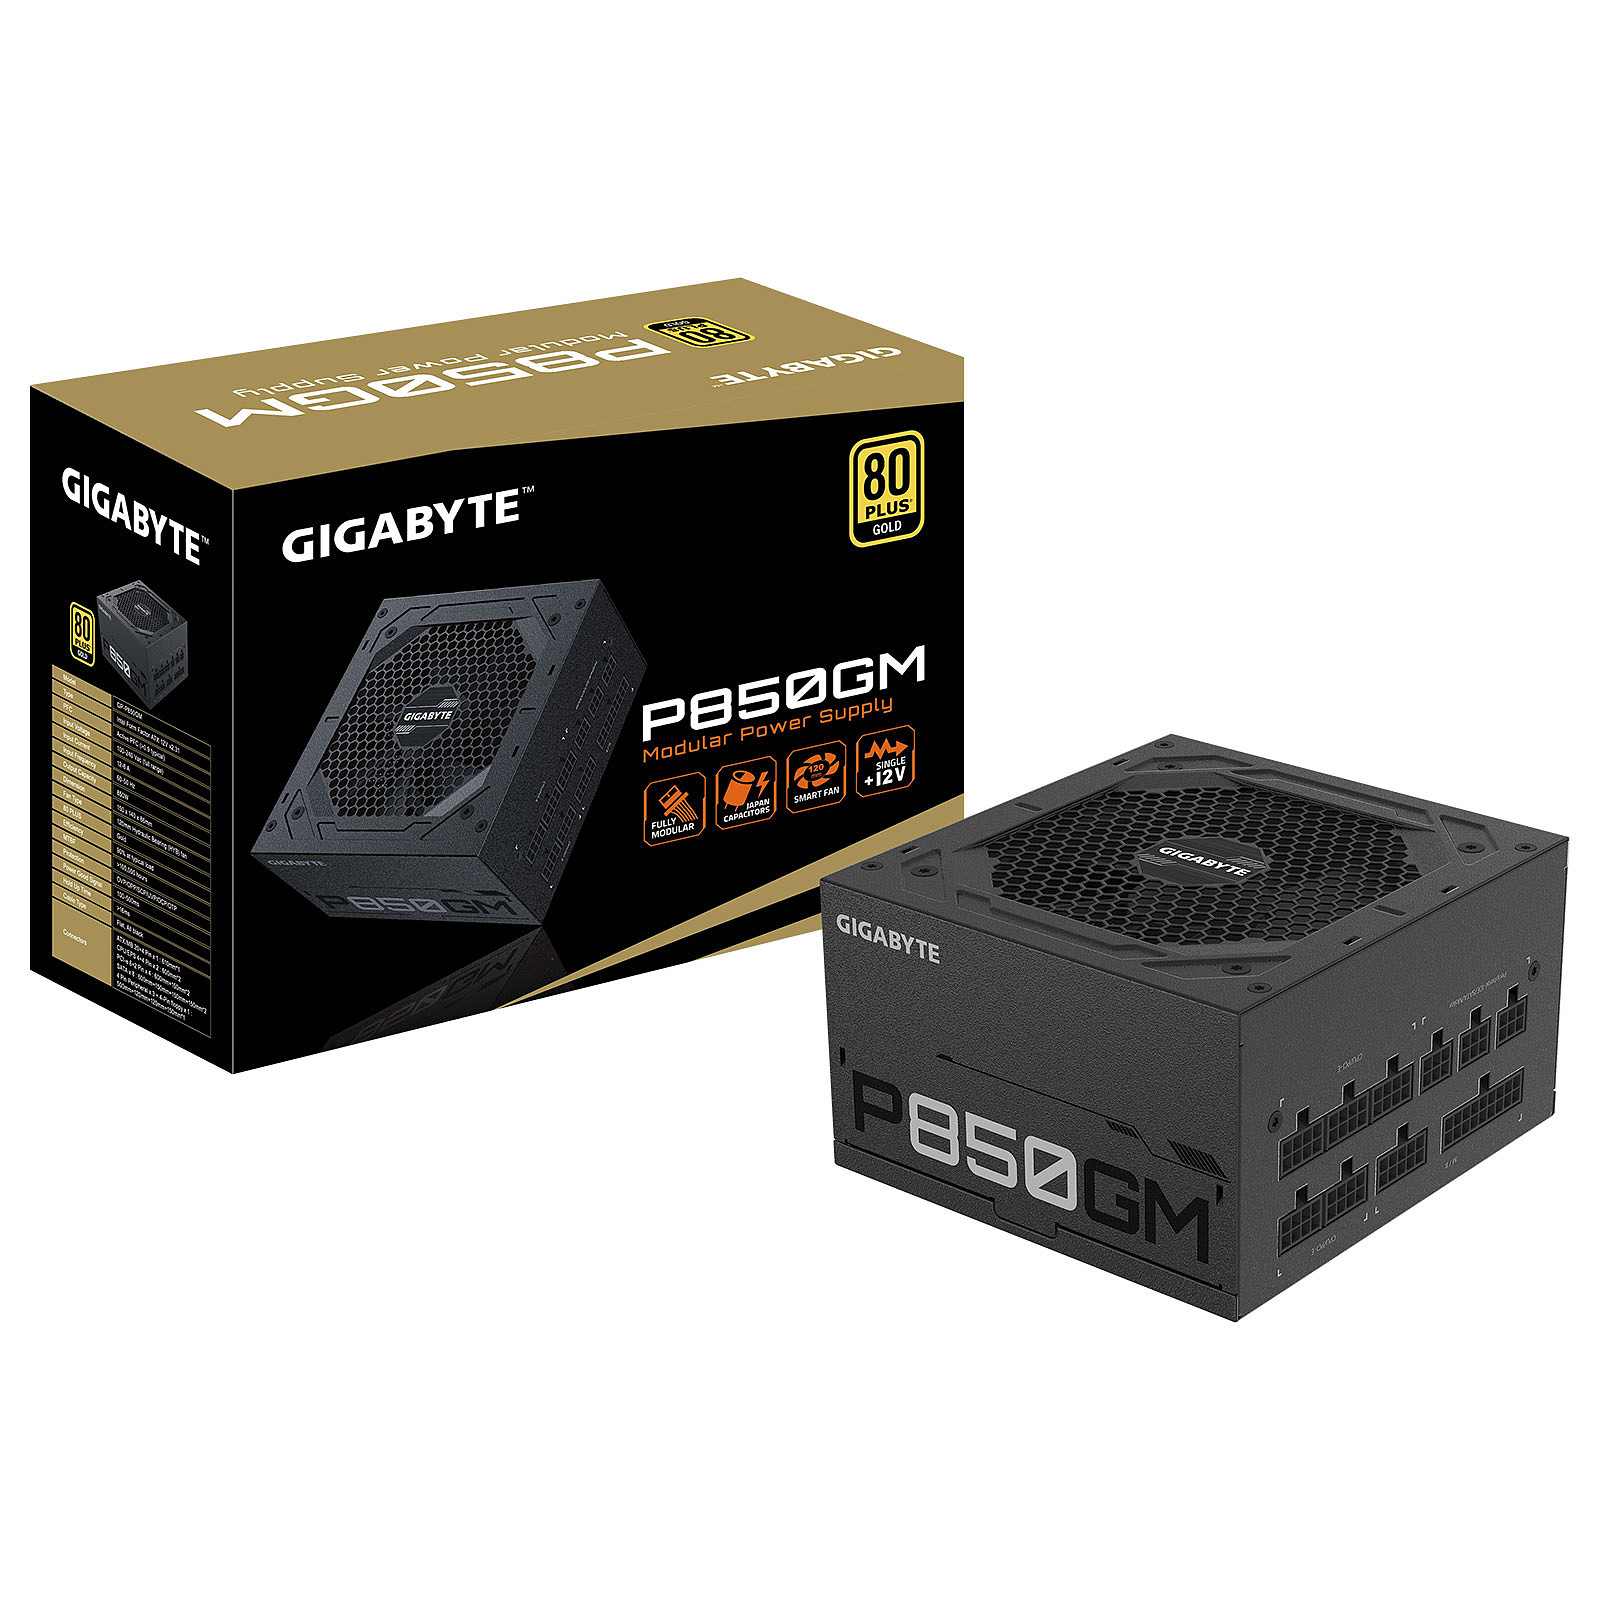 Gigabyte GP-P850GM · Occasion - Alimentation PC Gigabyte - Occasion